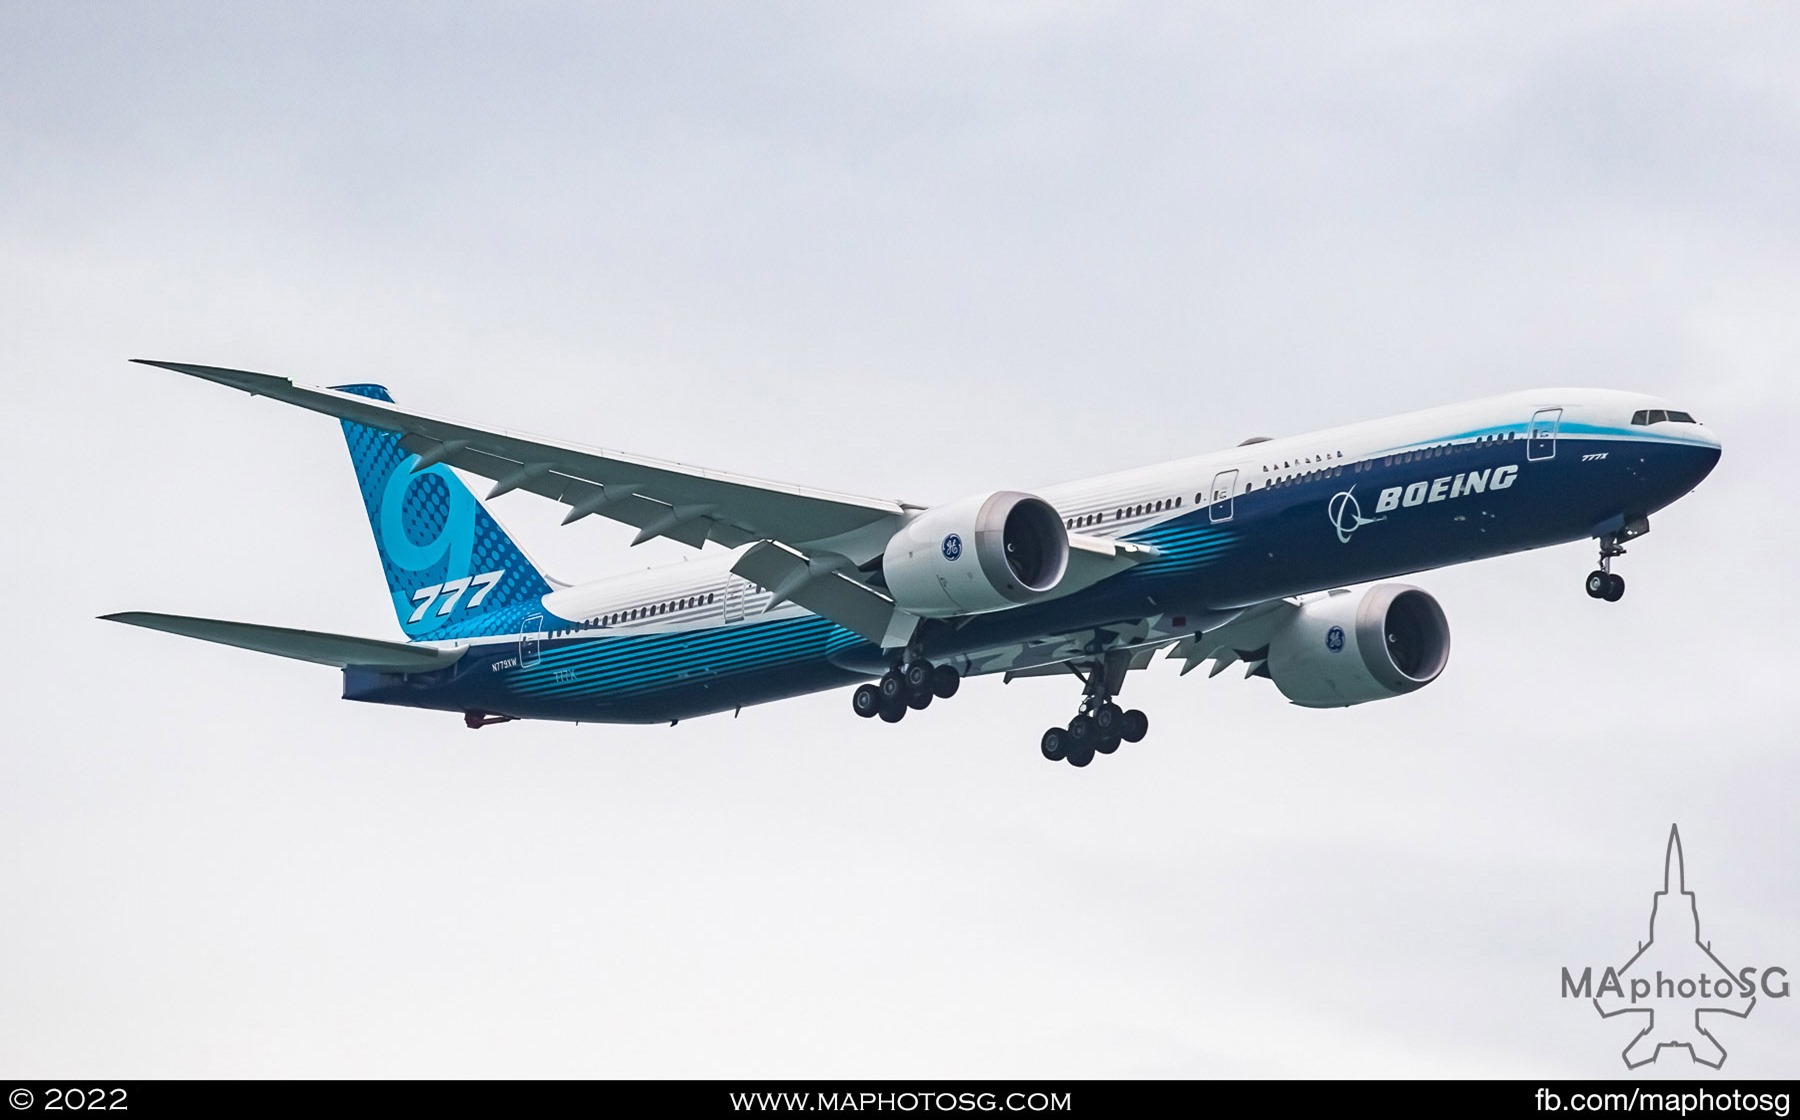 7 Feb 2022: BOE1, N779XW, Boeing 777-9